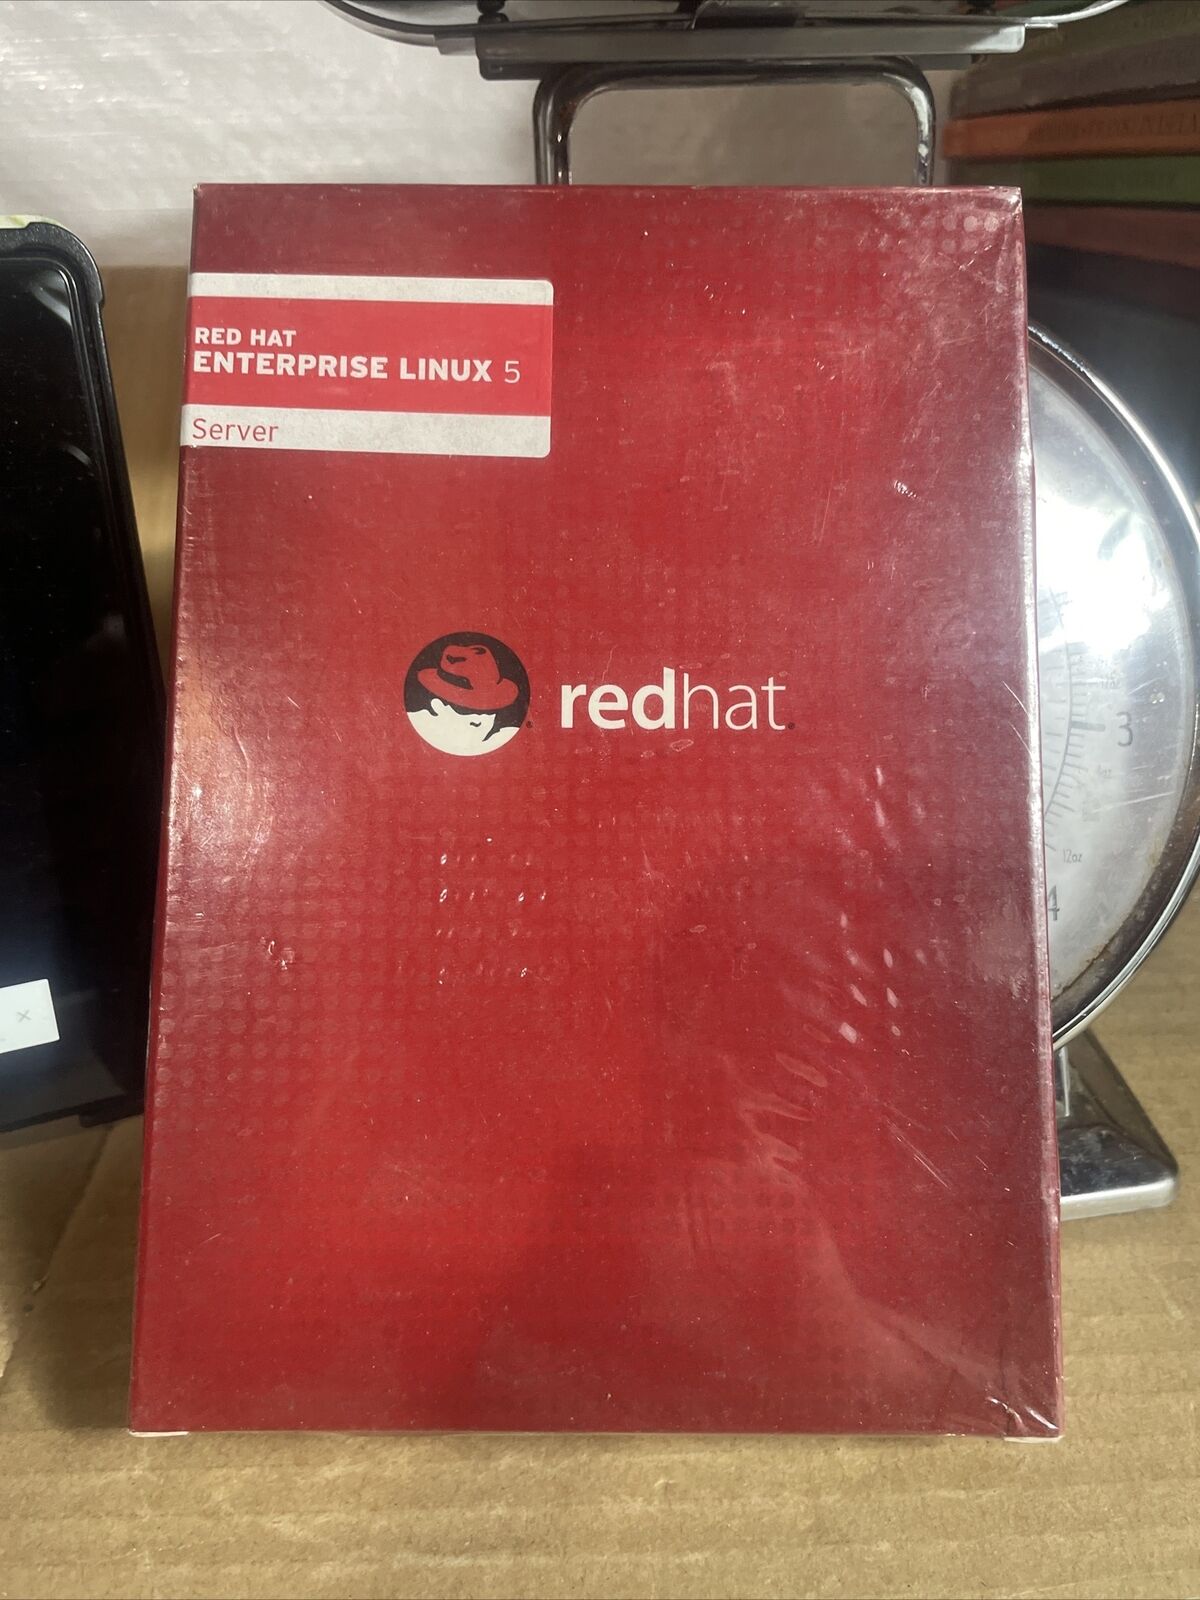 Red Hat Enterprise Linux 5 Server - New and Sealed